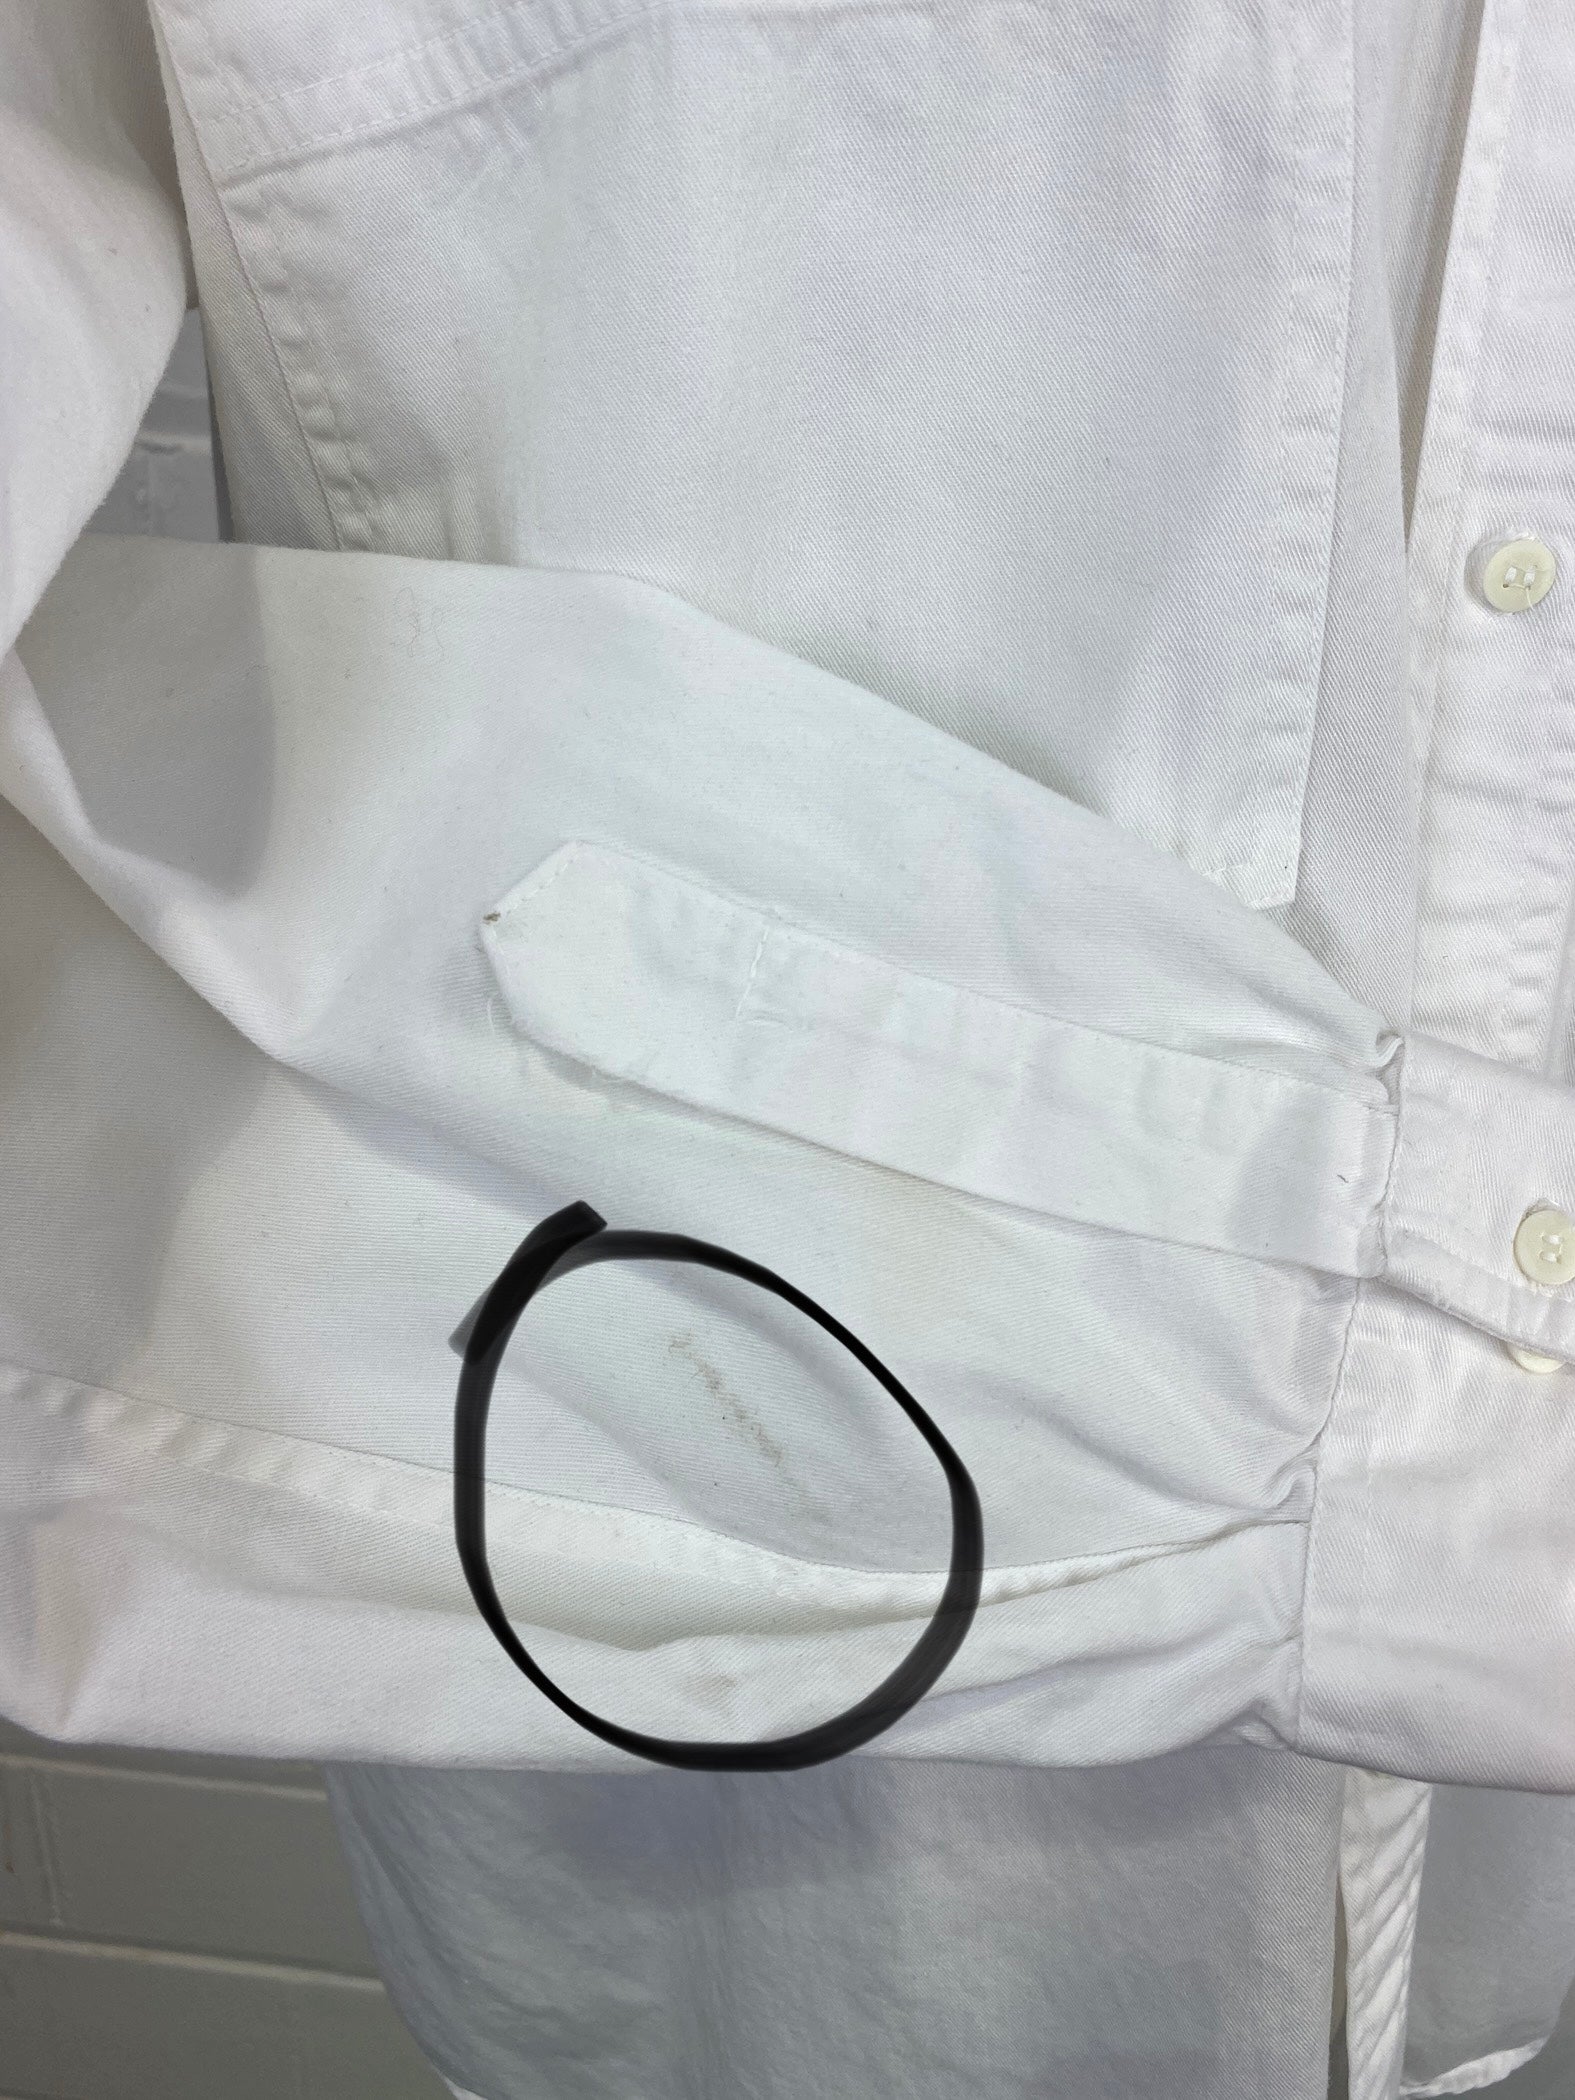 Vintage 80s Men's White Button-Up Shirt, Large